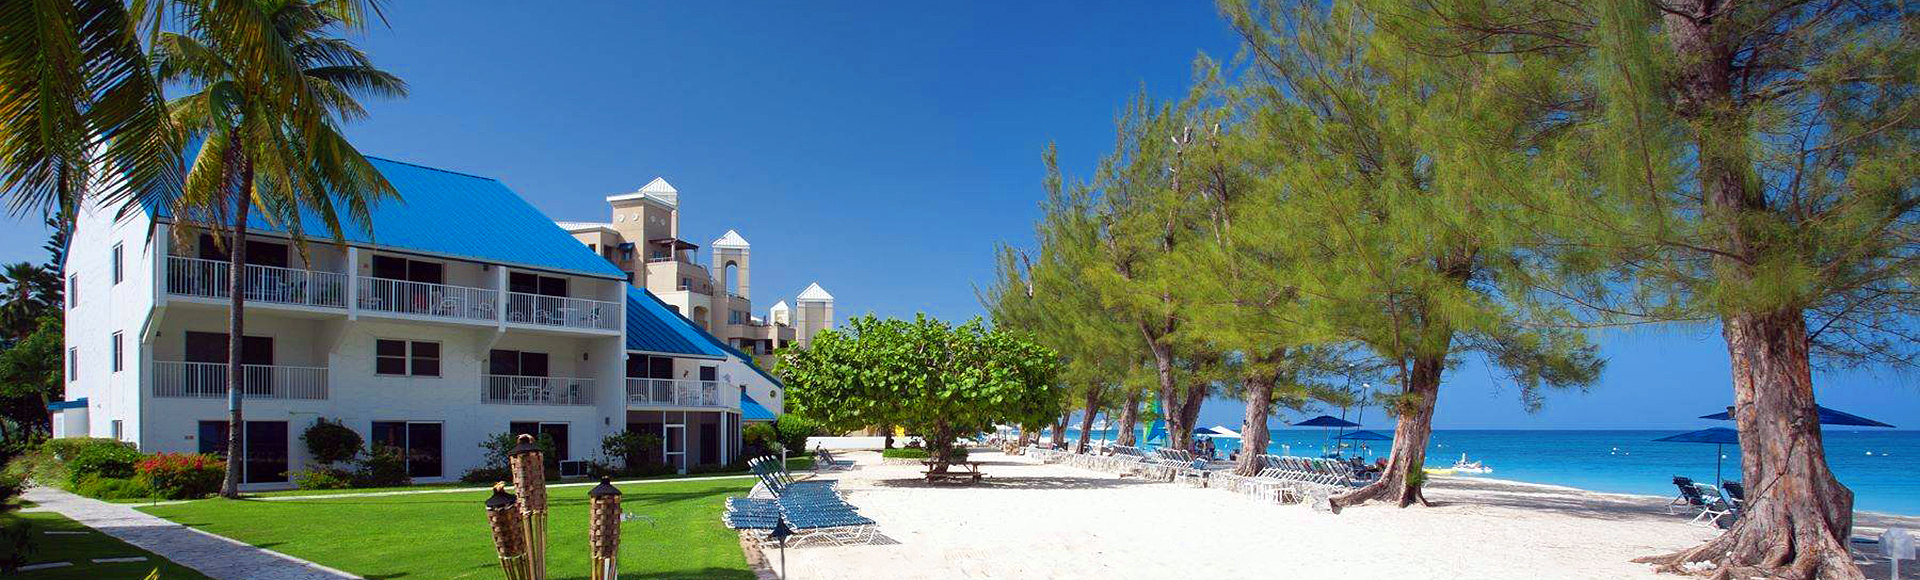 Villas on Seven Mile Beach, Grand Cayman - top 5